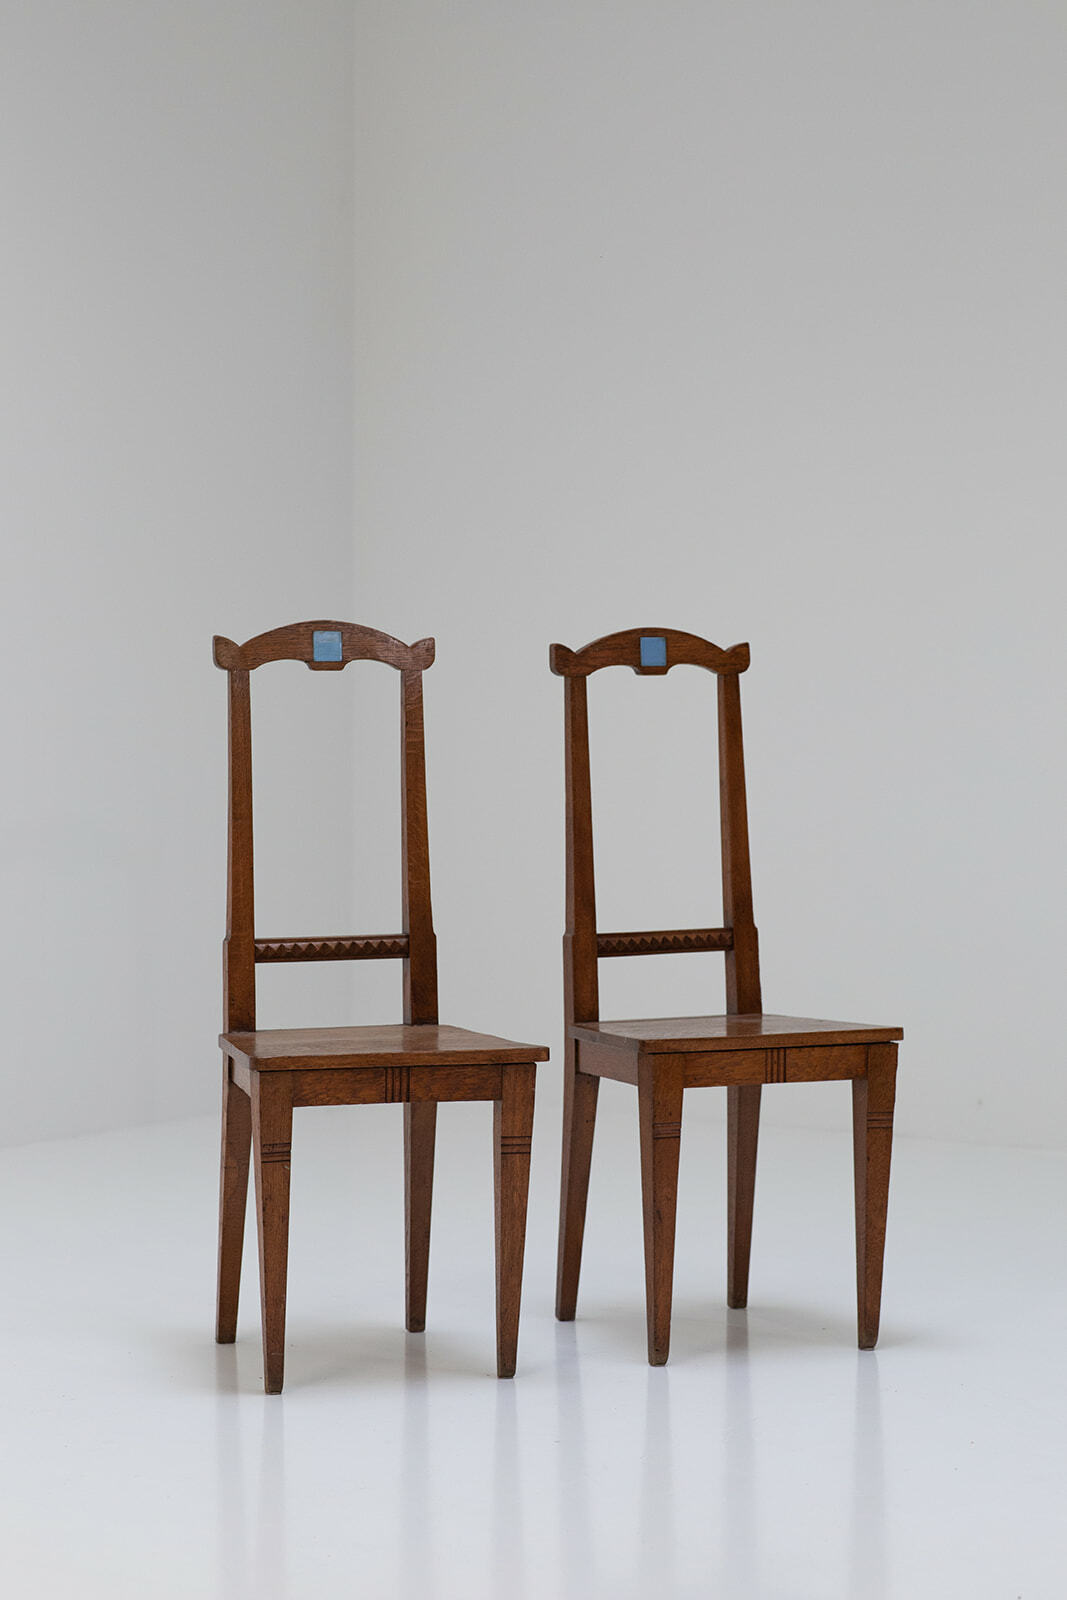 1930's Italian chairs